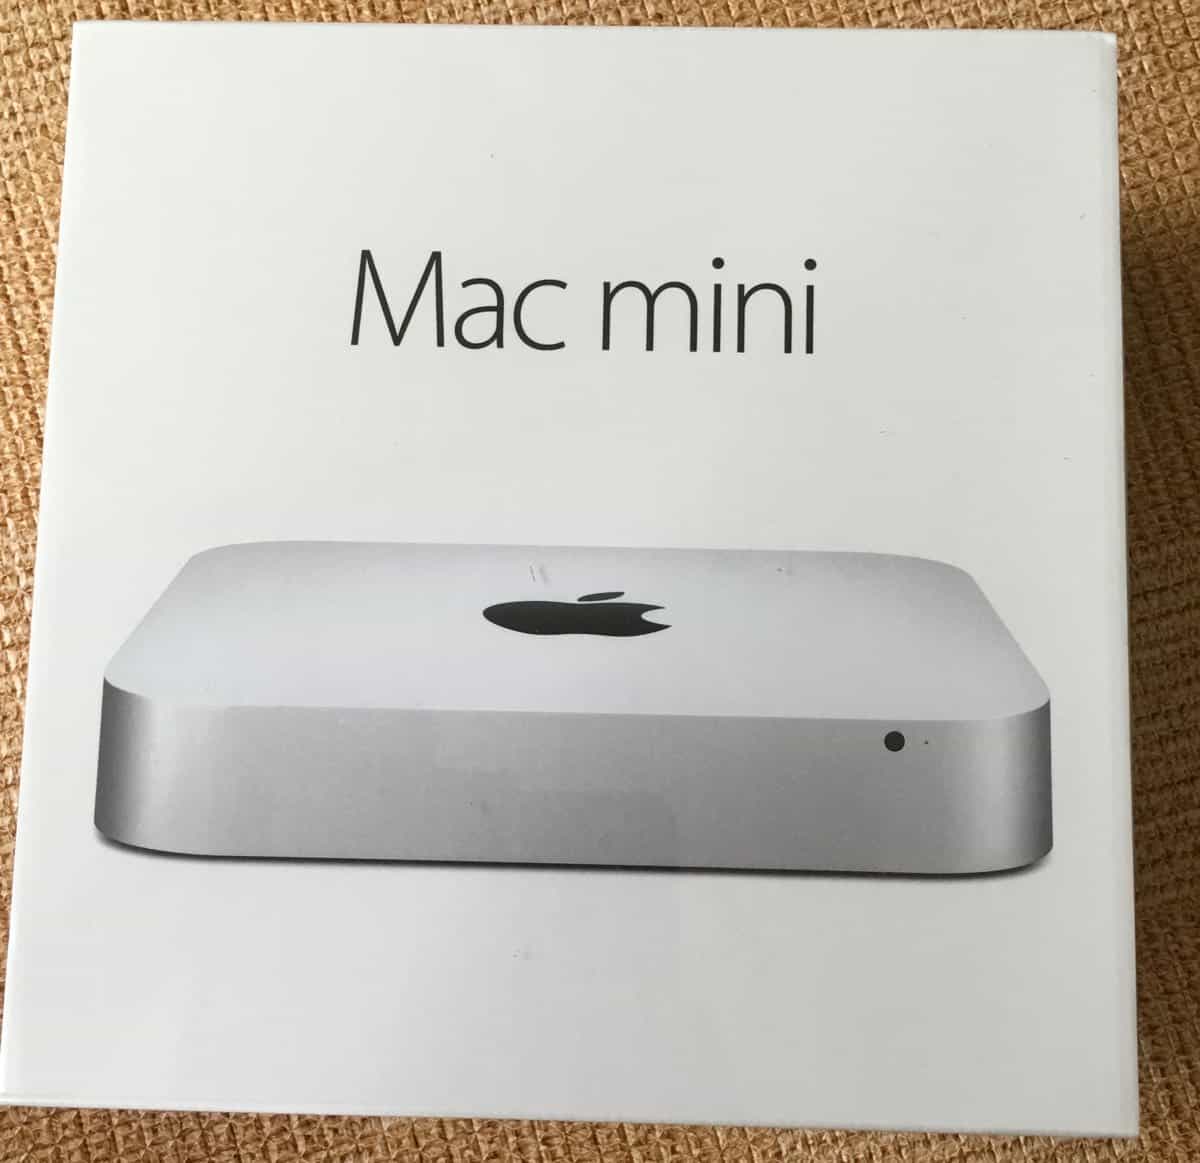 Mac Mini Arrives